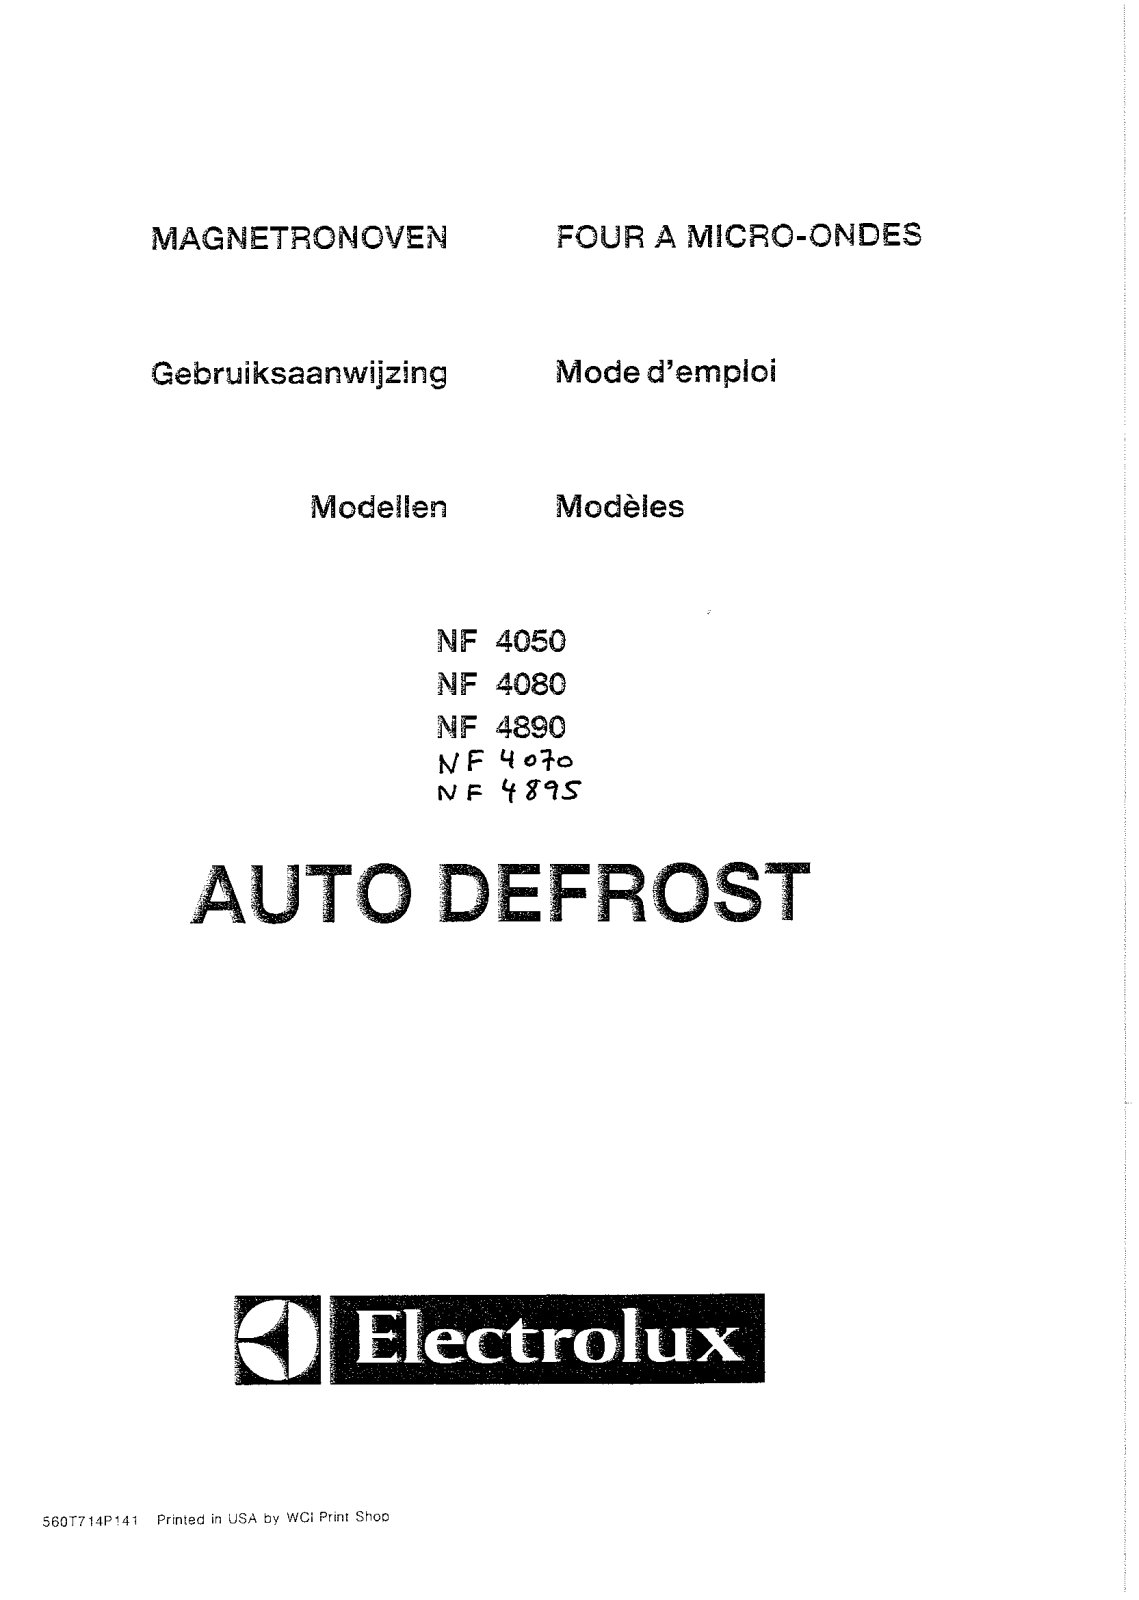 electrolux NF4895, NF4070, NF4080, NF4050, NF4890 User Manual